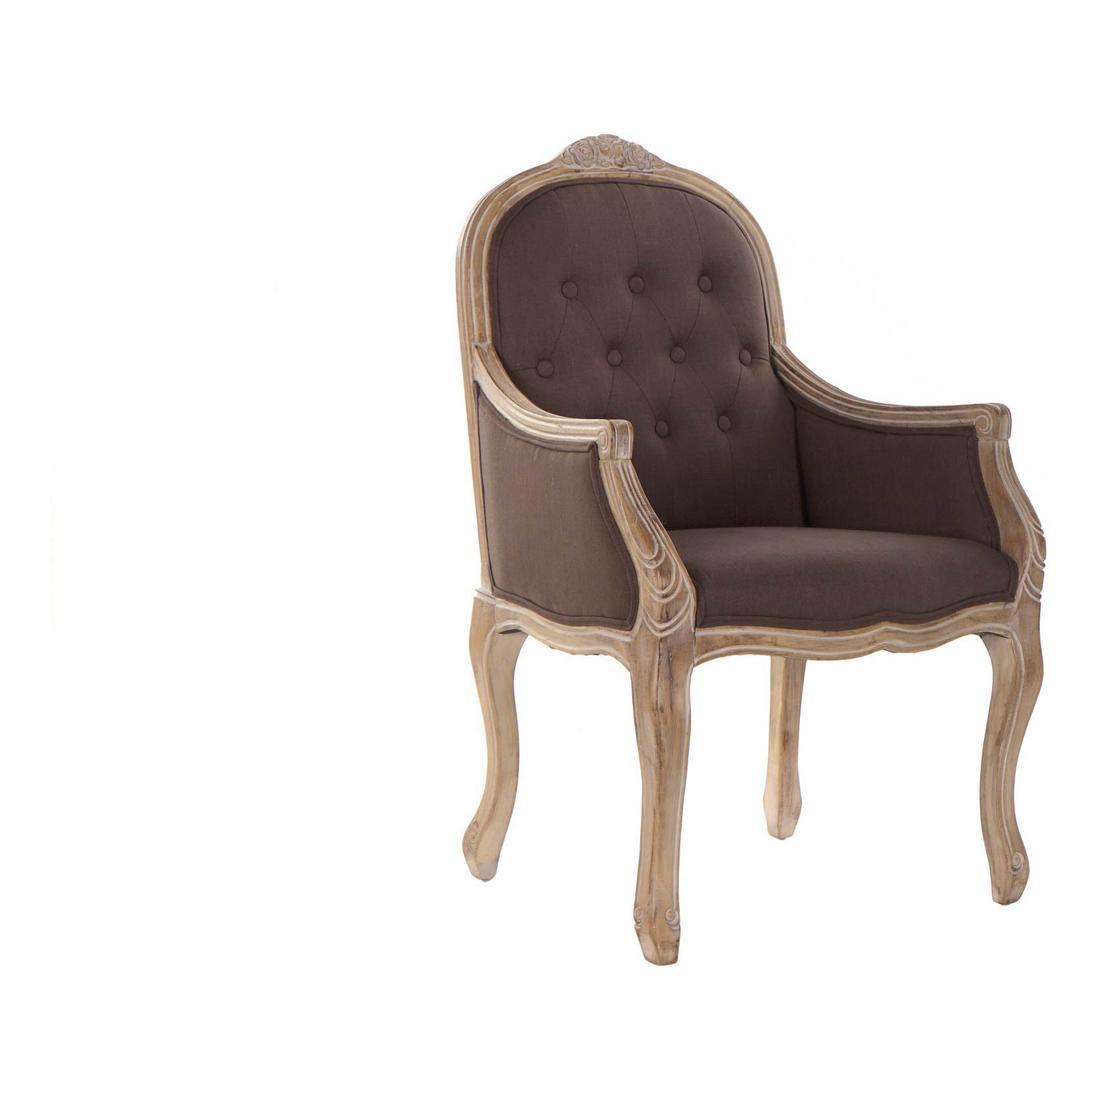 Baroque chair "The king's choice"